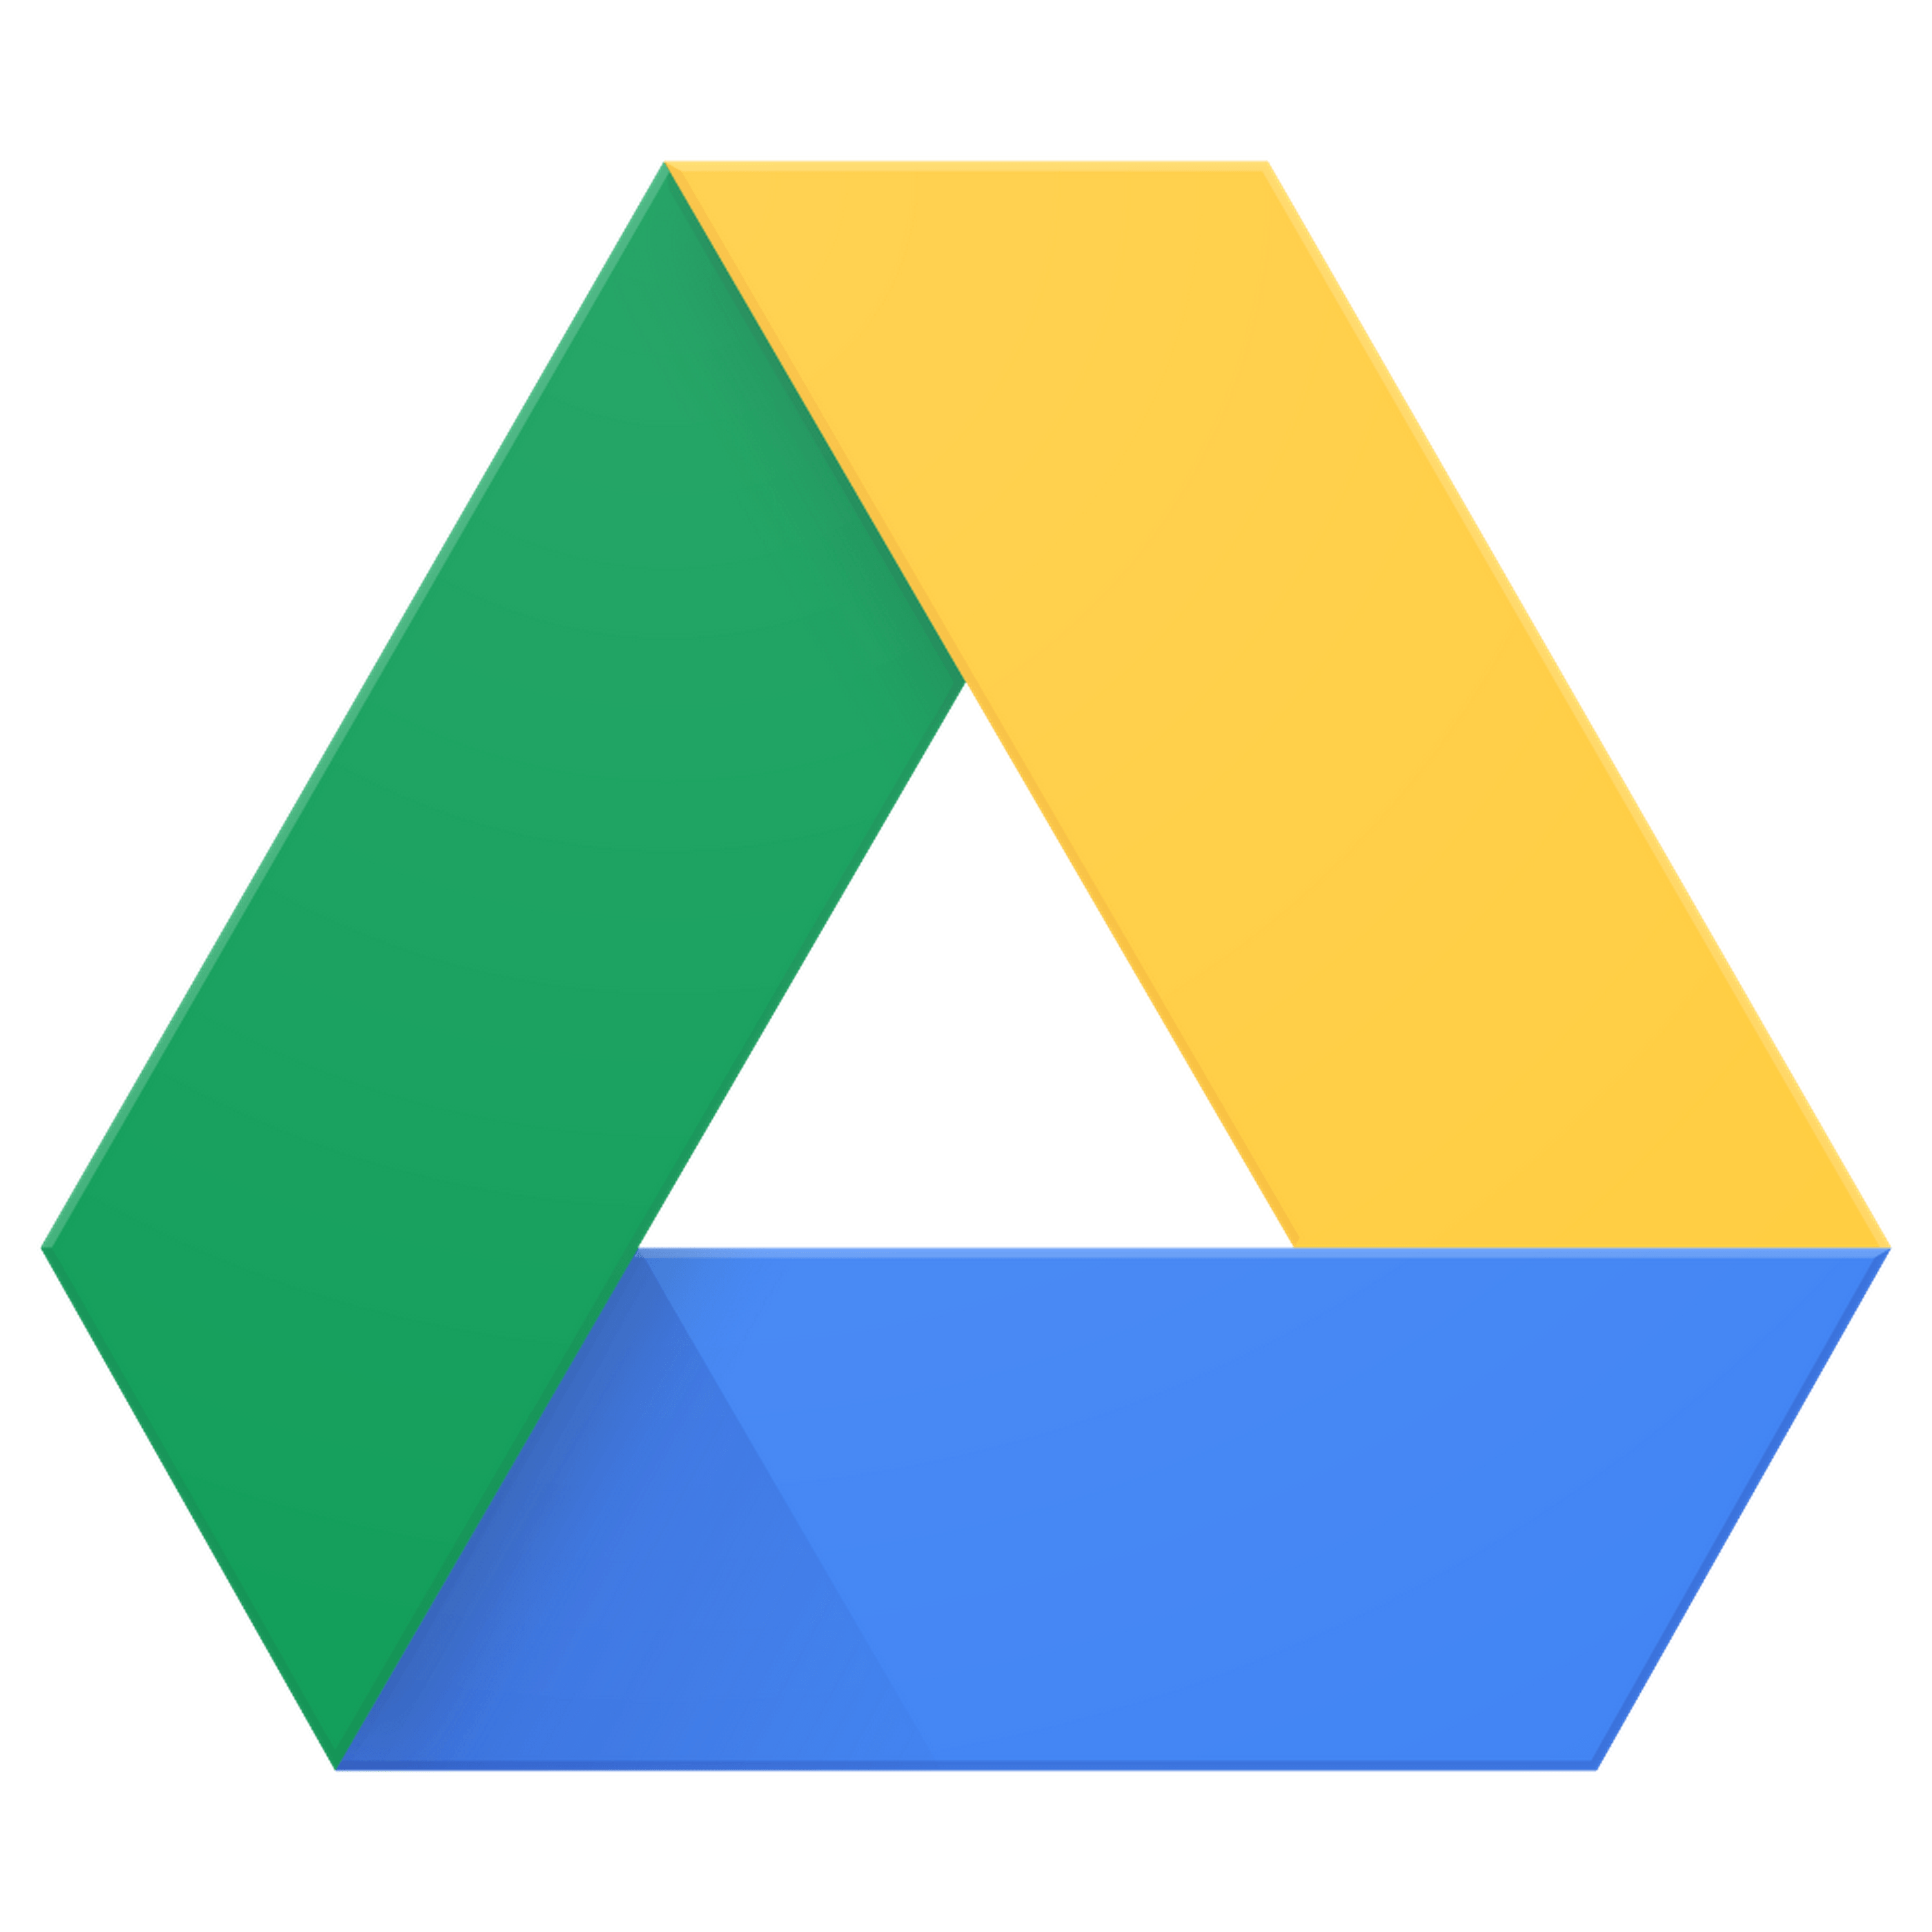 Google Drive Logo - File:Google Drive logo.png - Wikimedia Commons